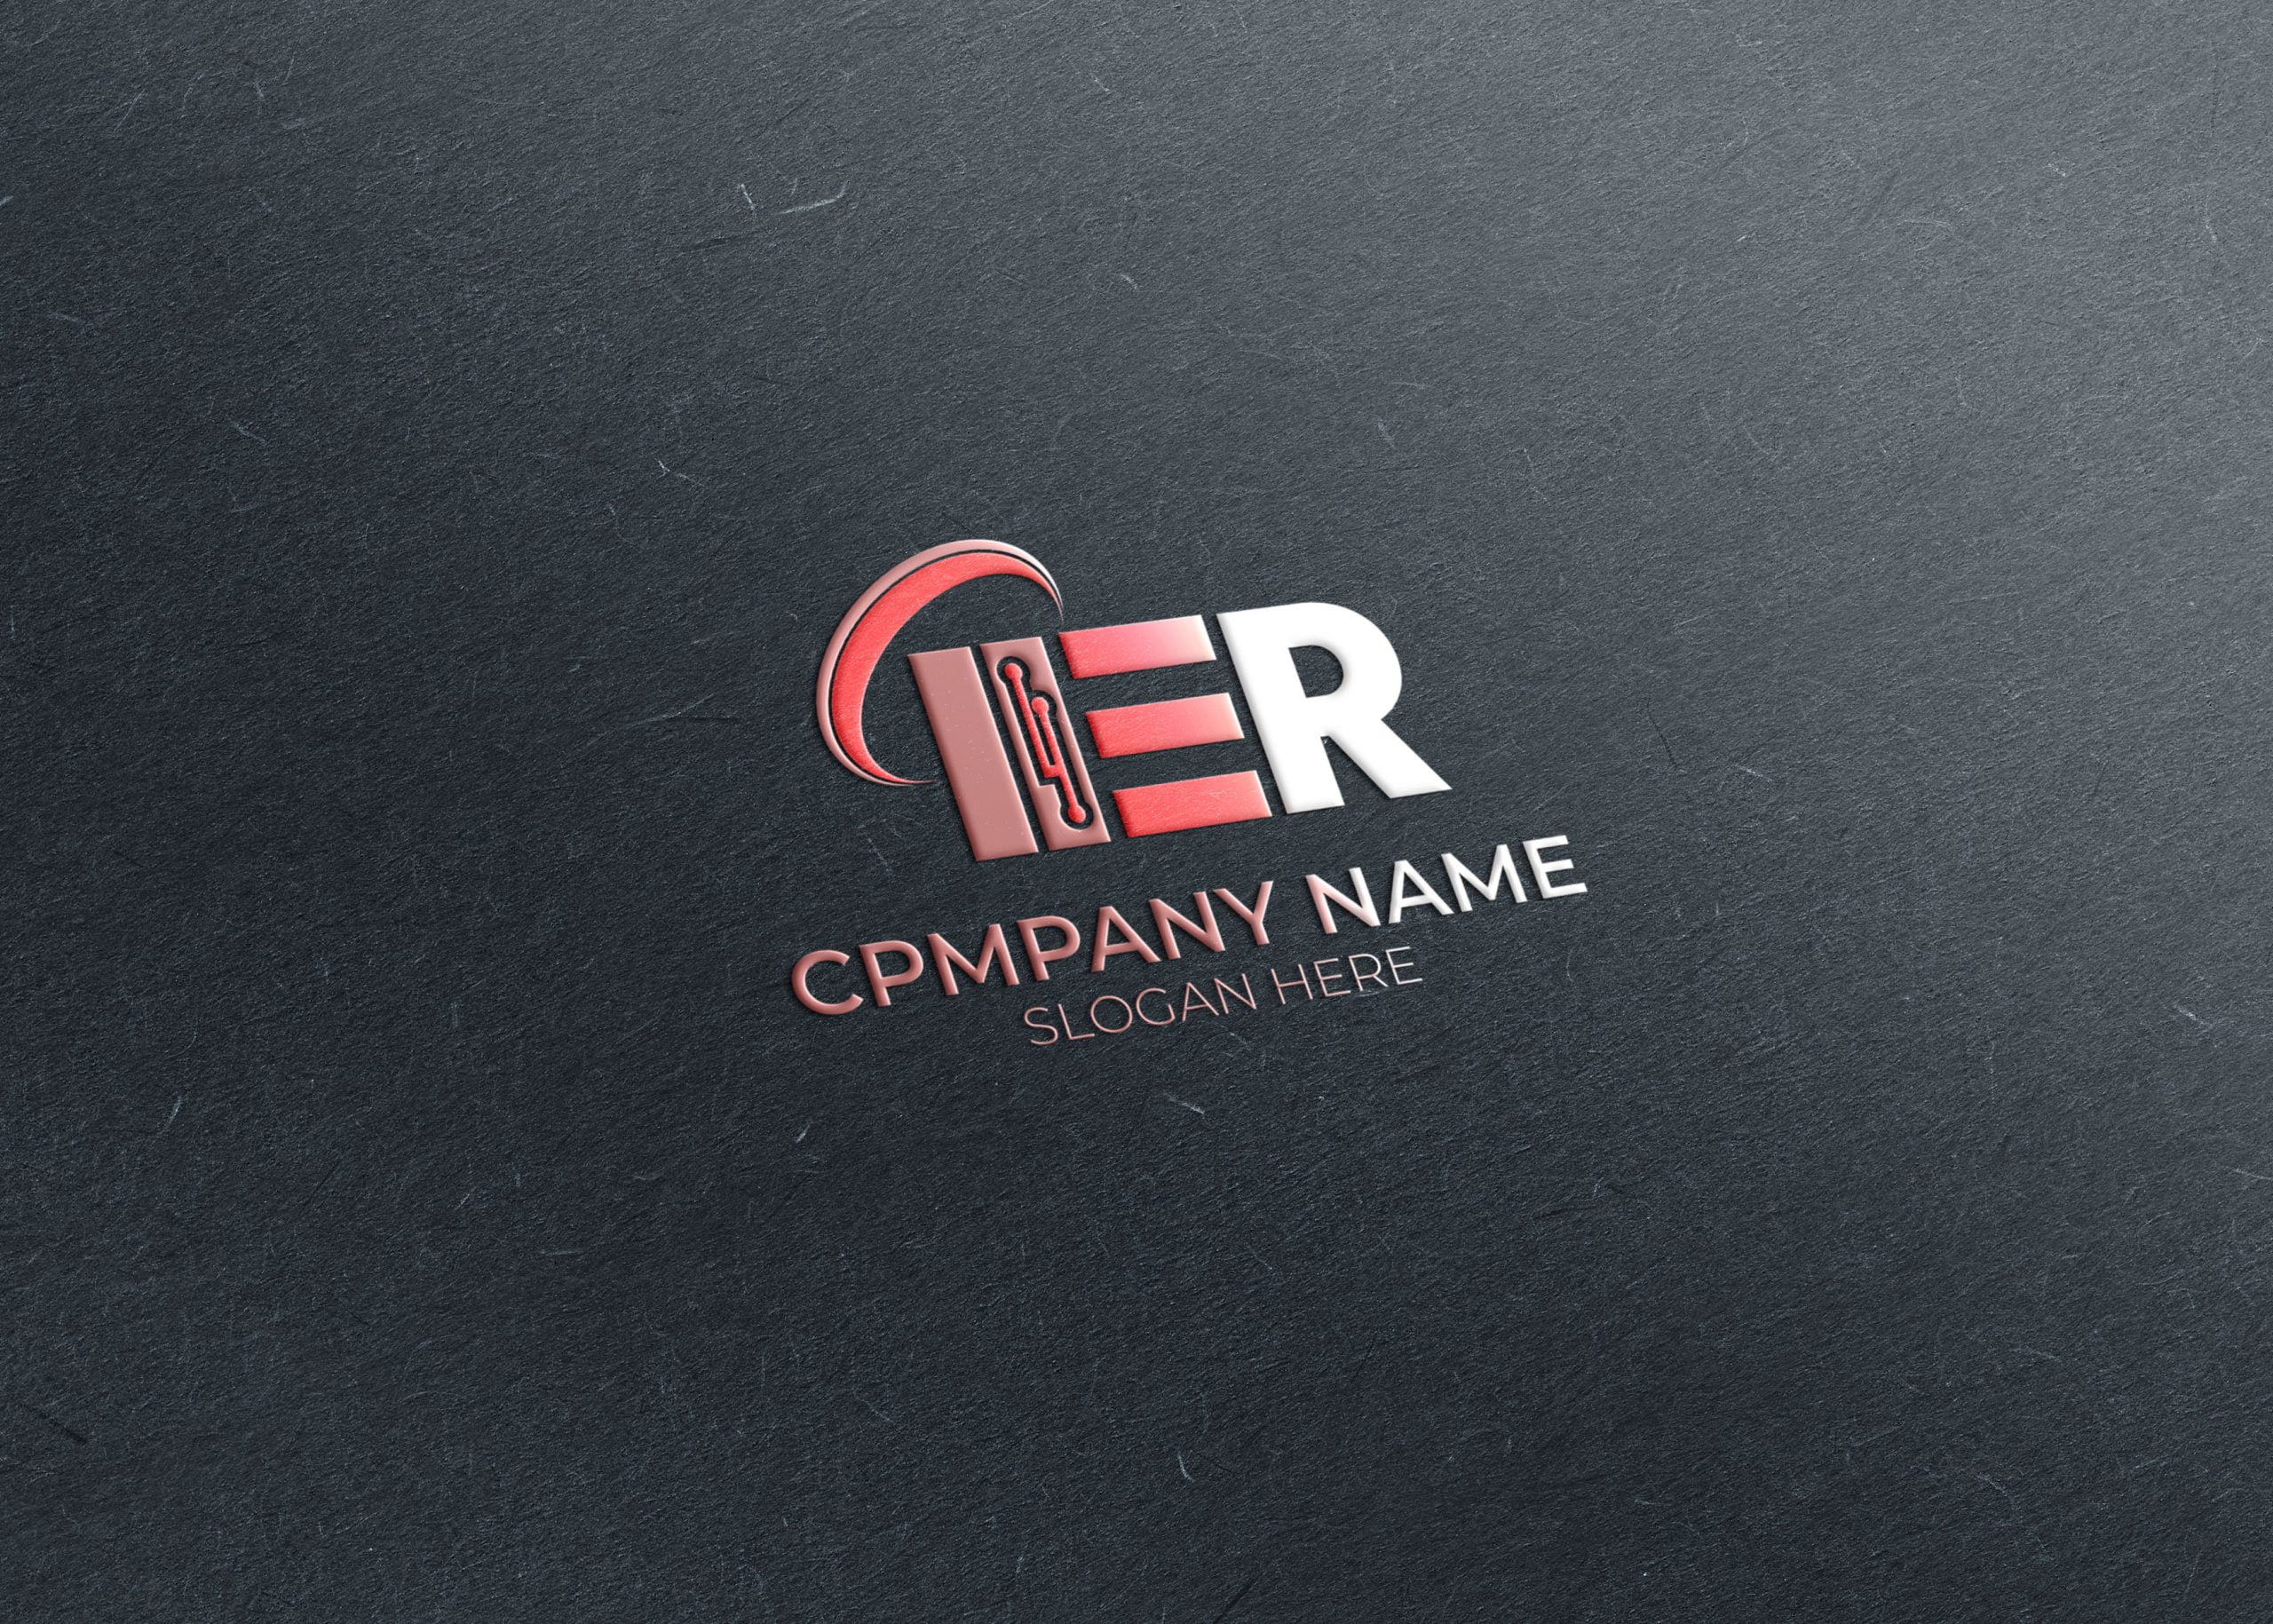 3d TIER logo for tech company